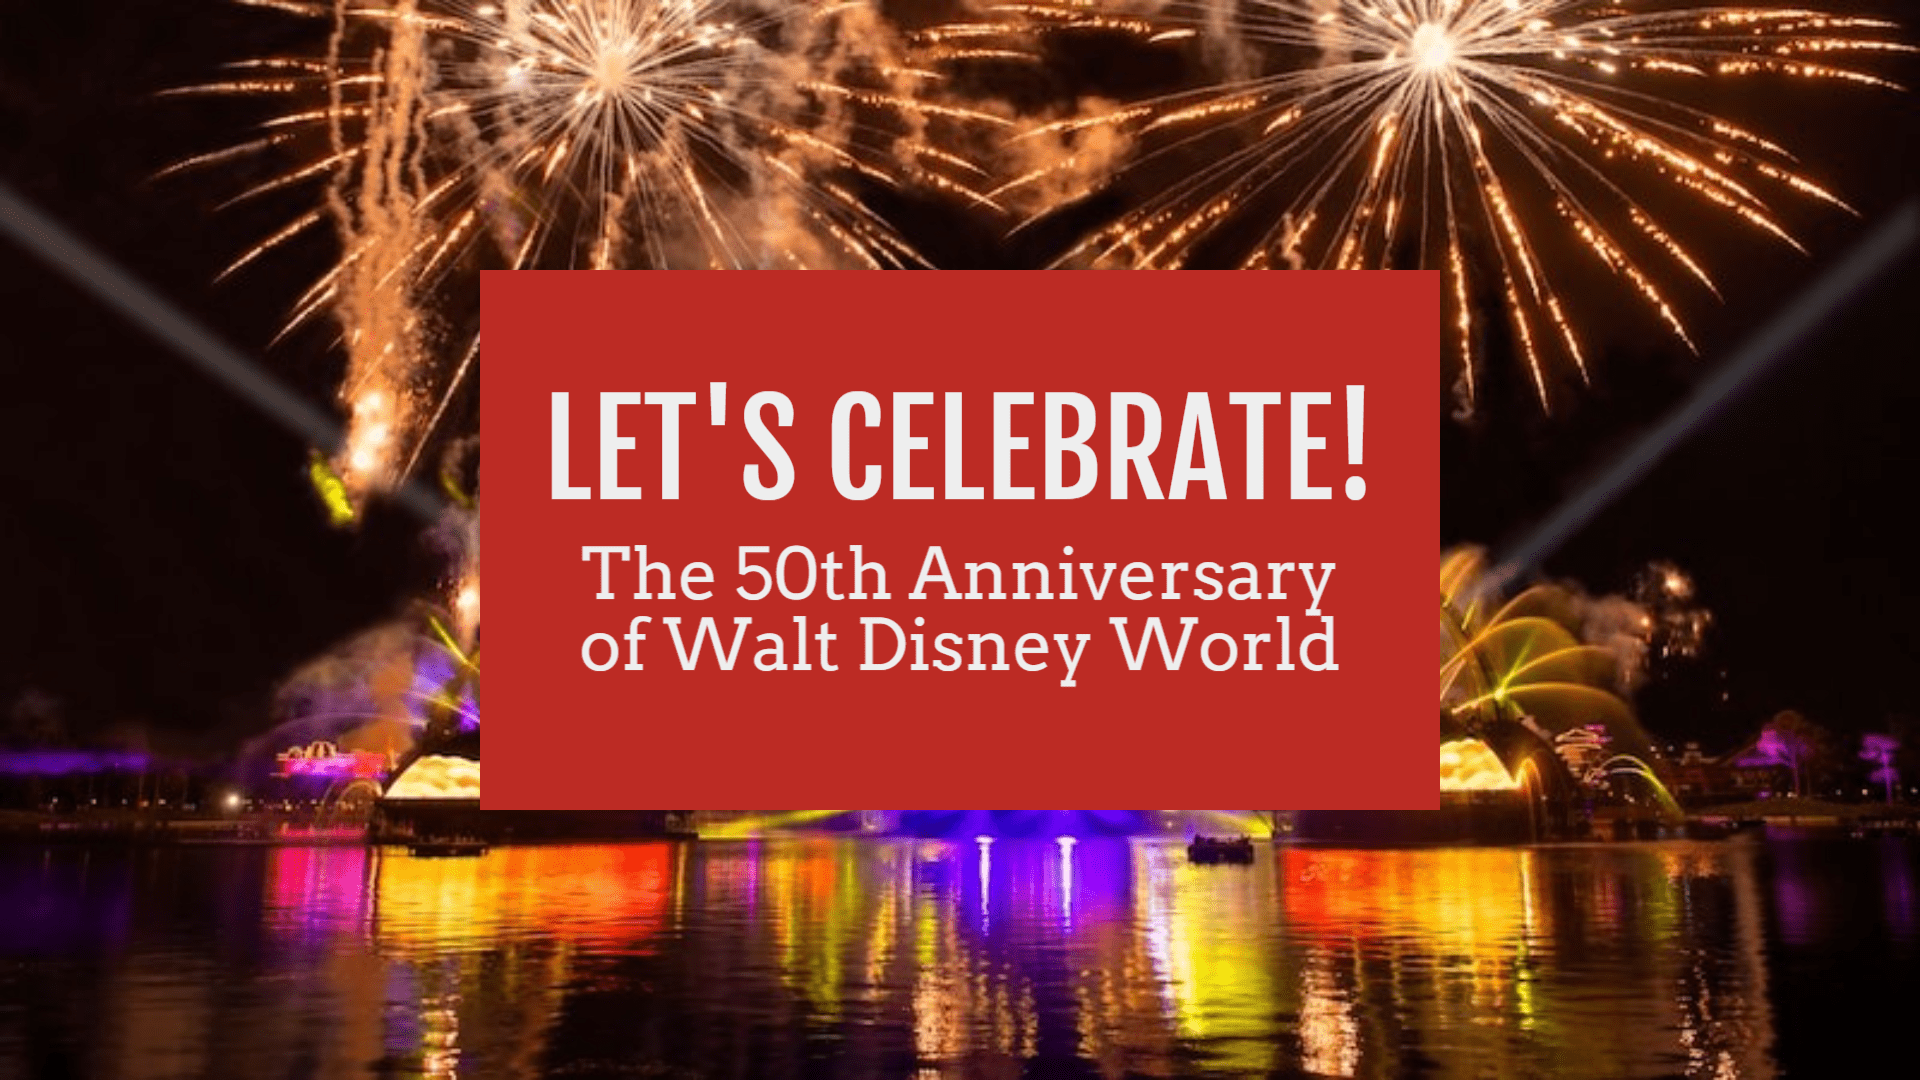 lets celebrate the 50th Anniversary of Walt Disney World